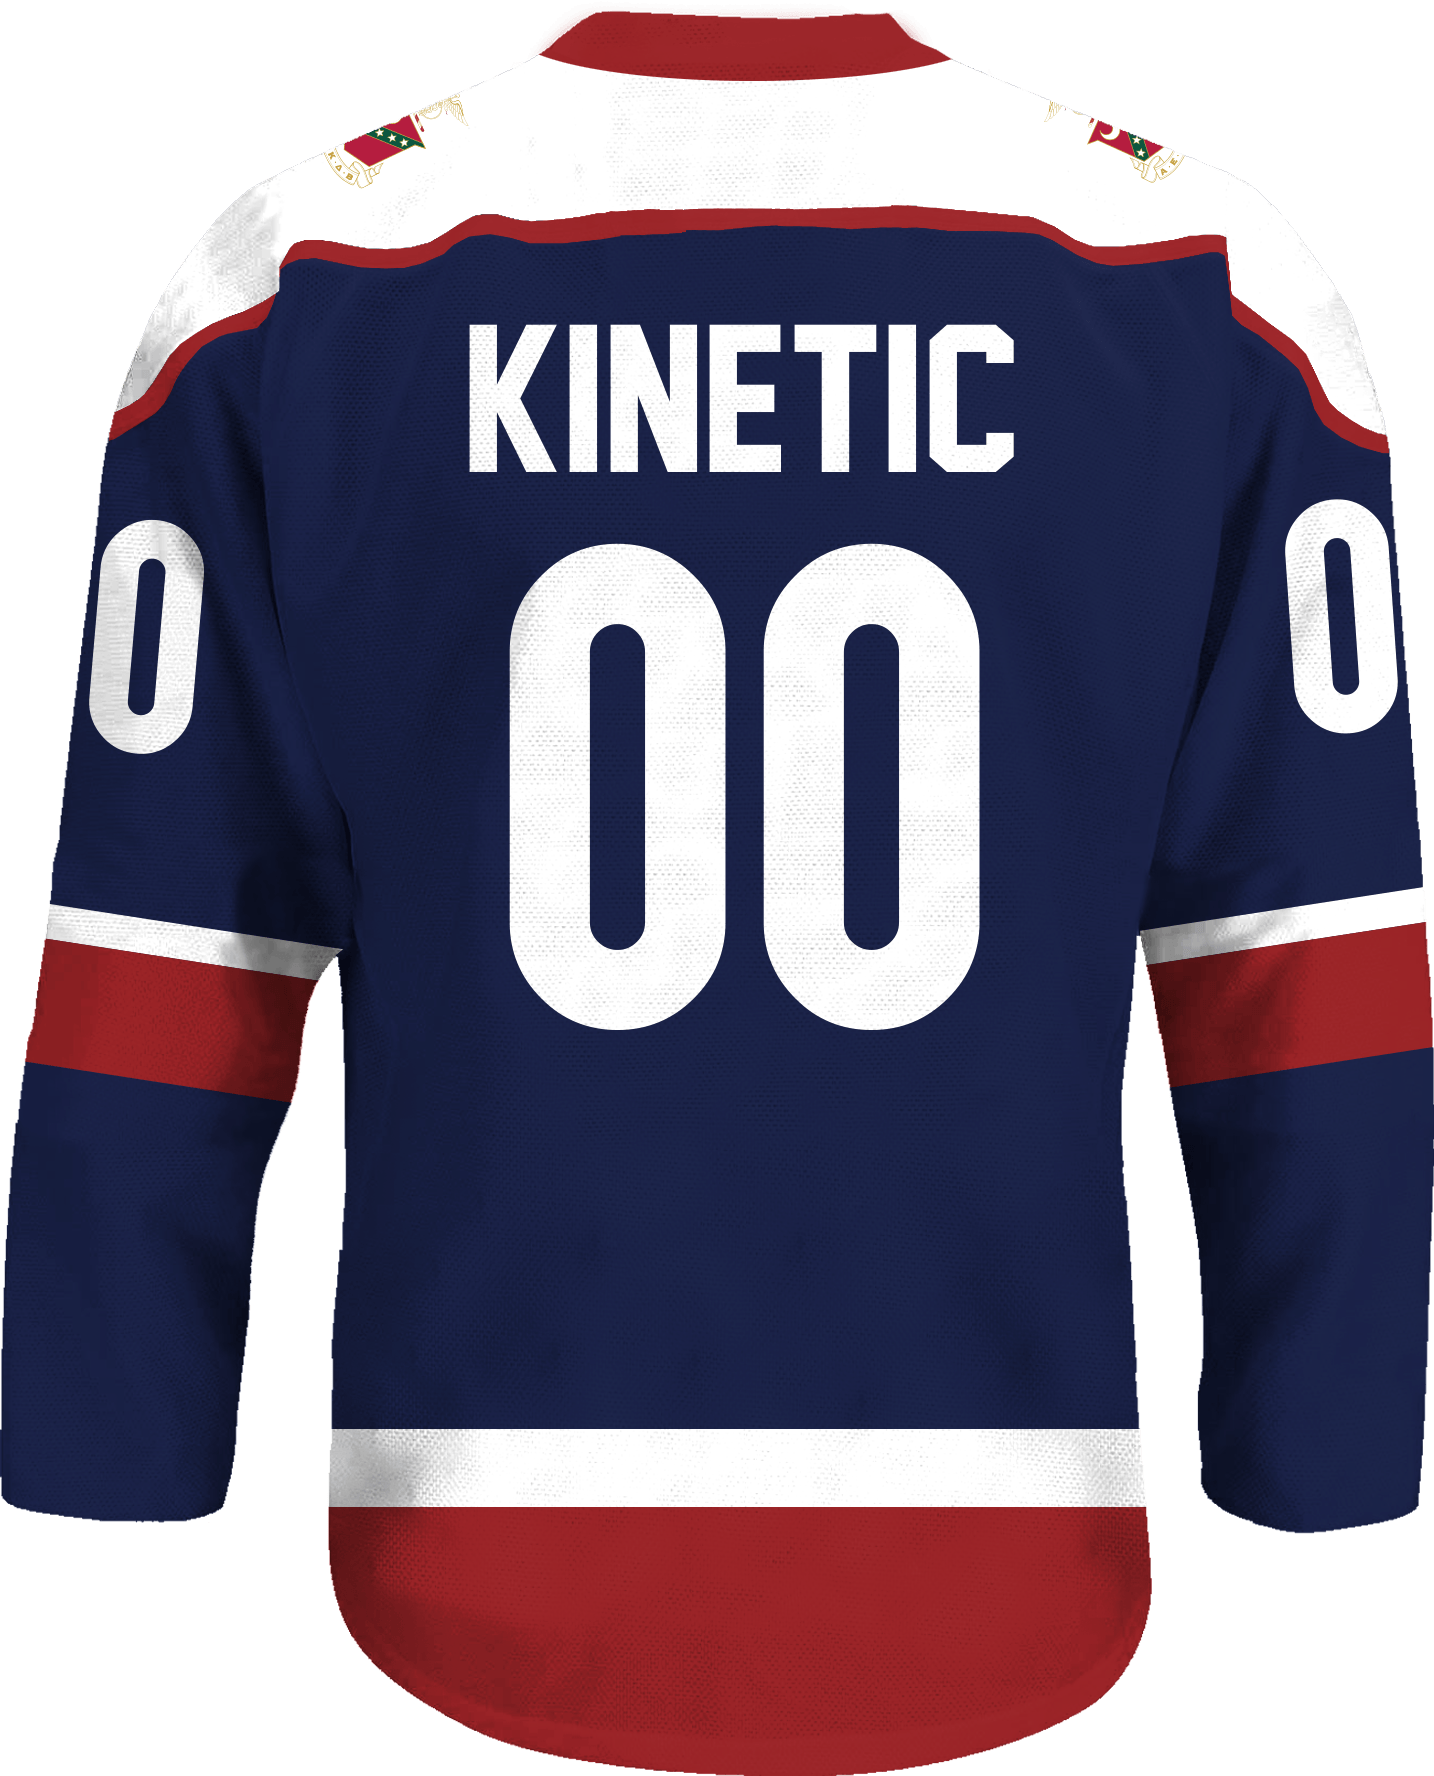 Kappa Sigma - Fame Hockey Jersey - Kinetic Society